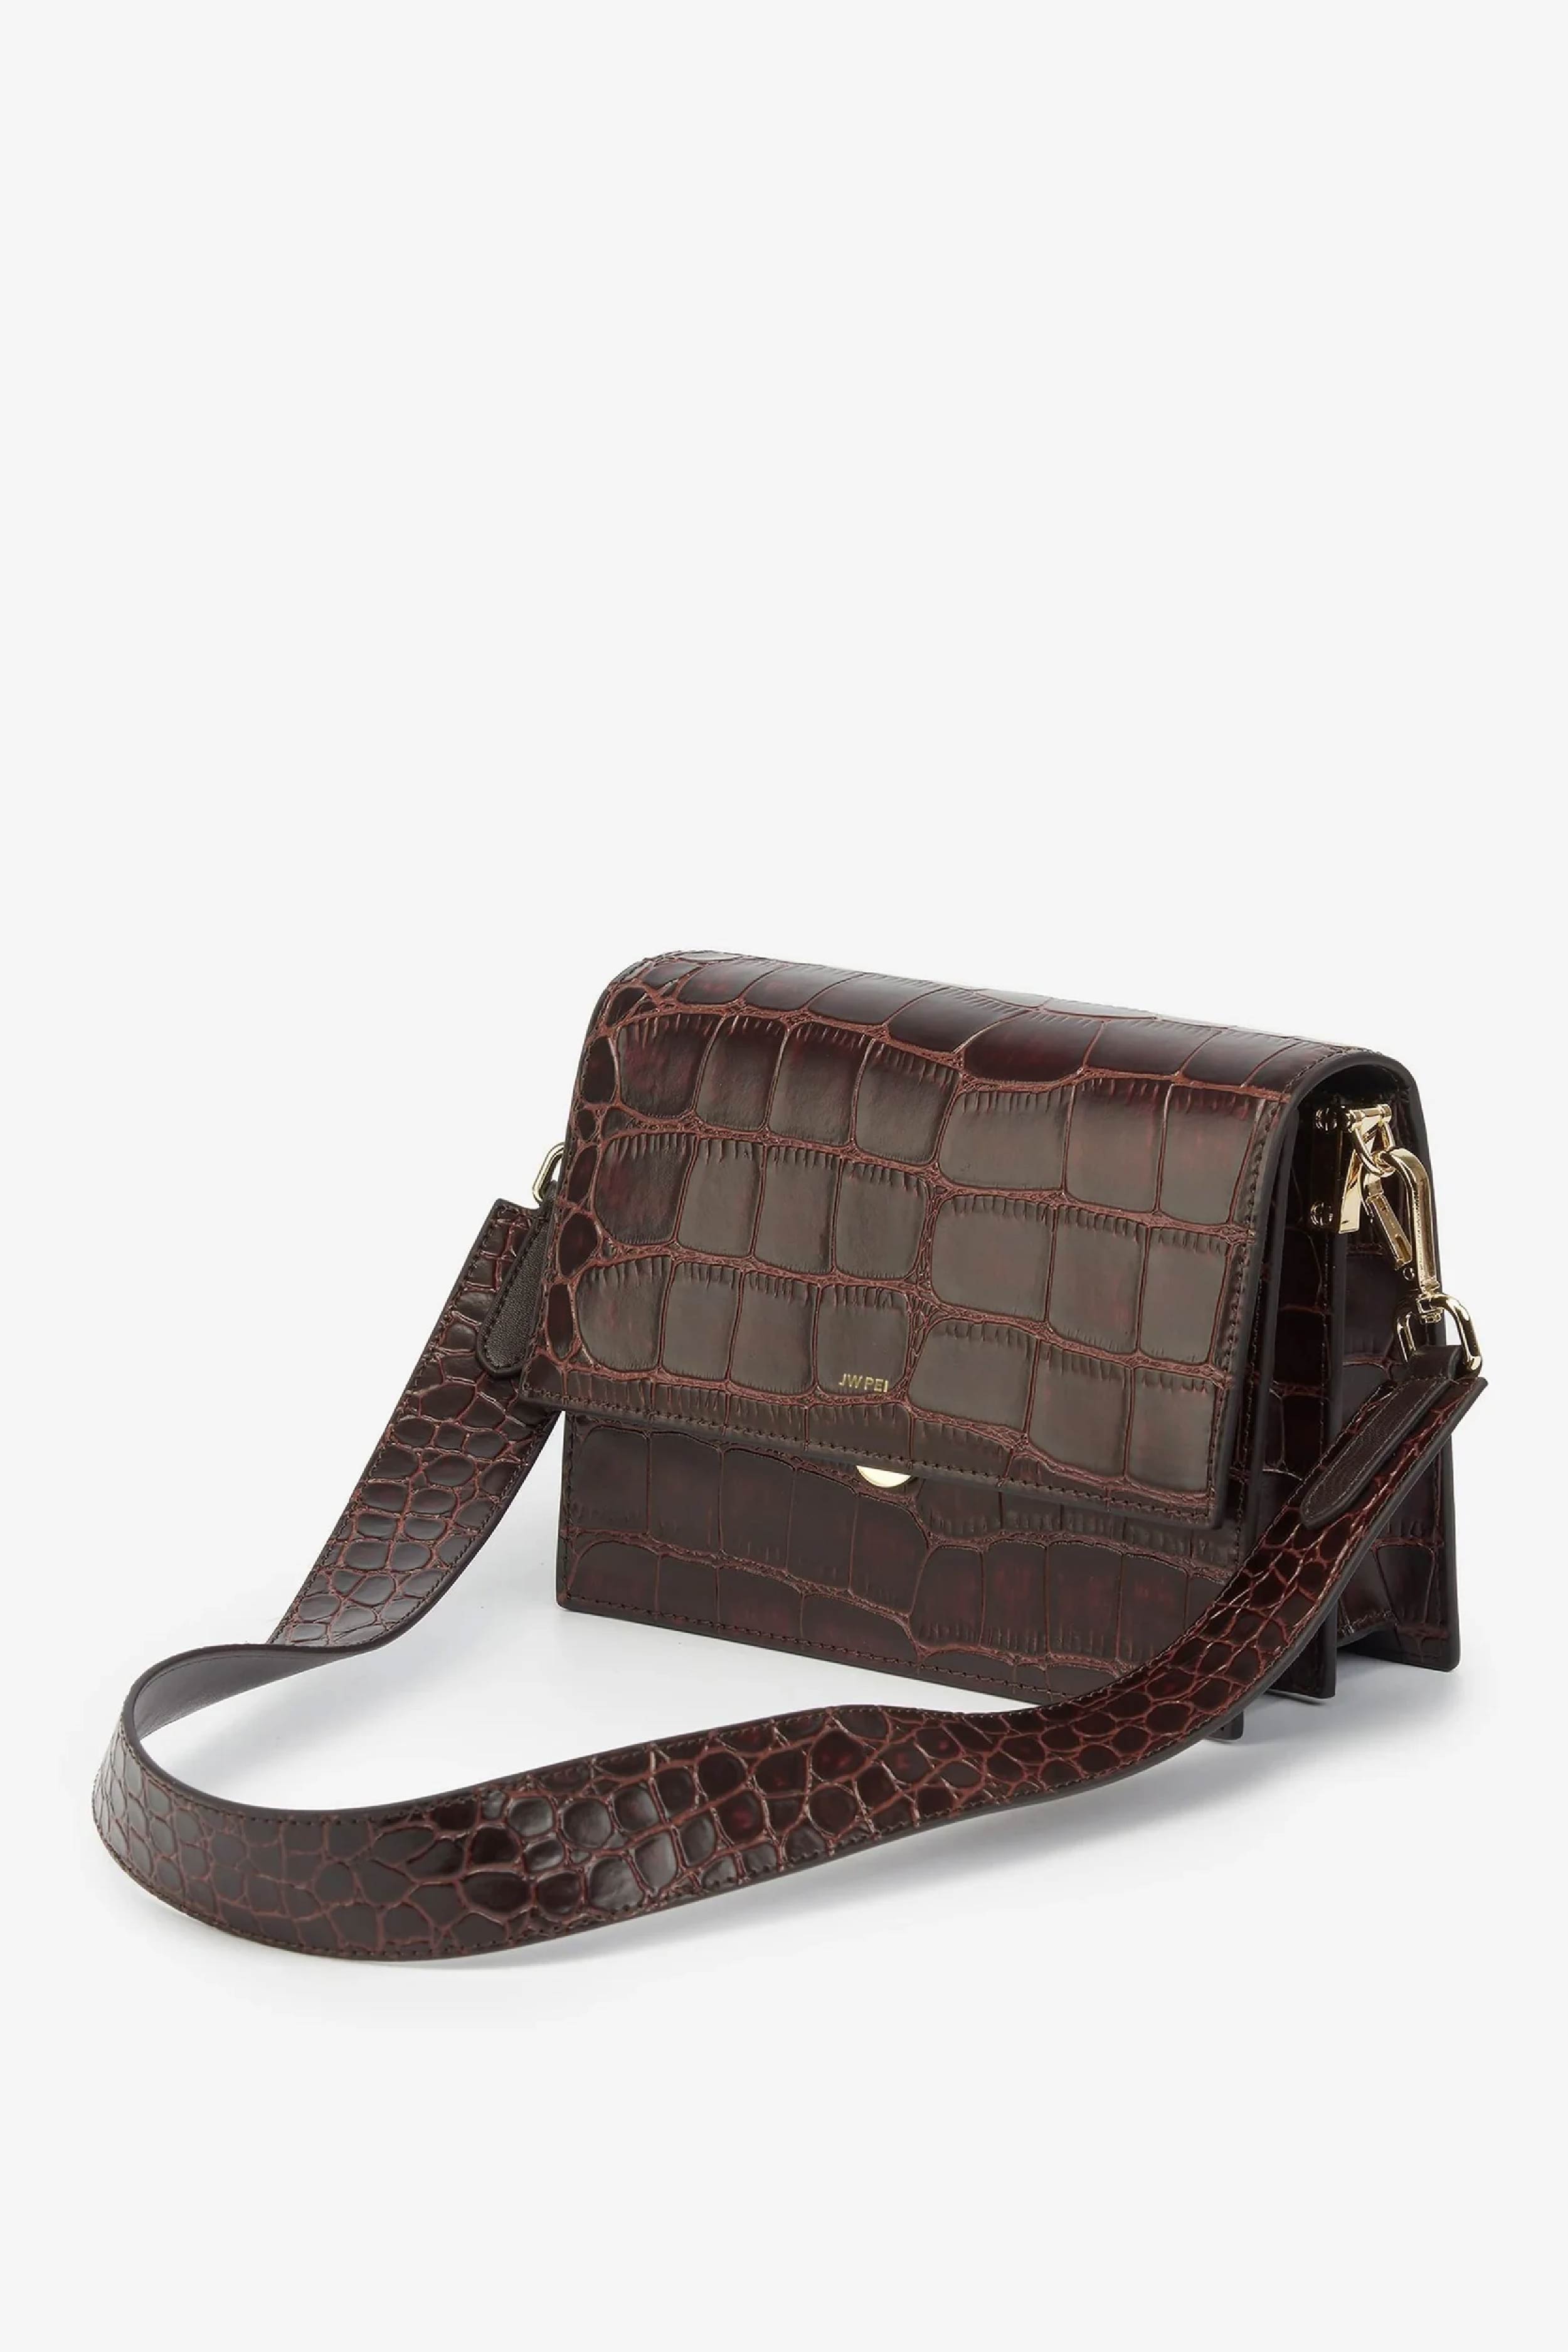 JW PEI Eva Shoulder Baguette Bag Purse Brown Croc Effect